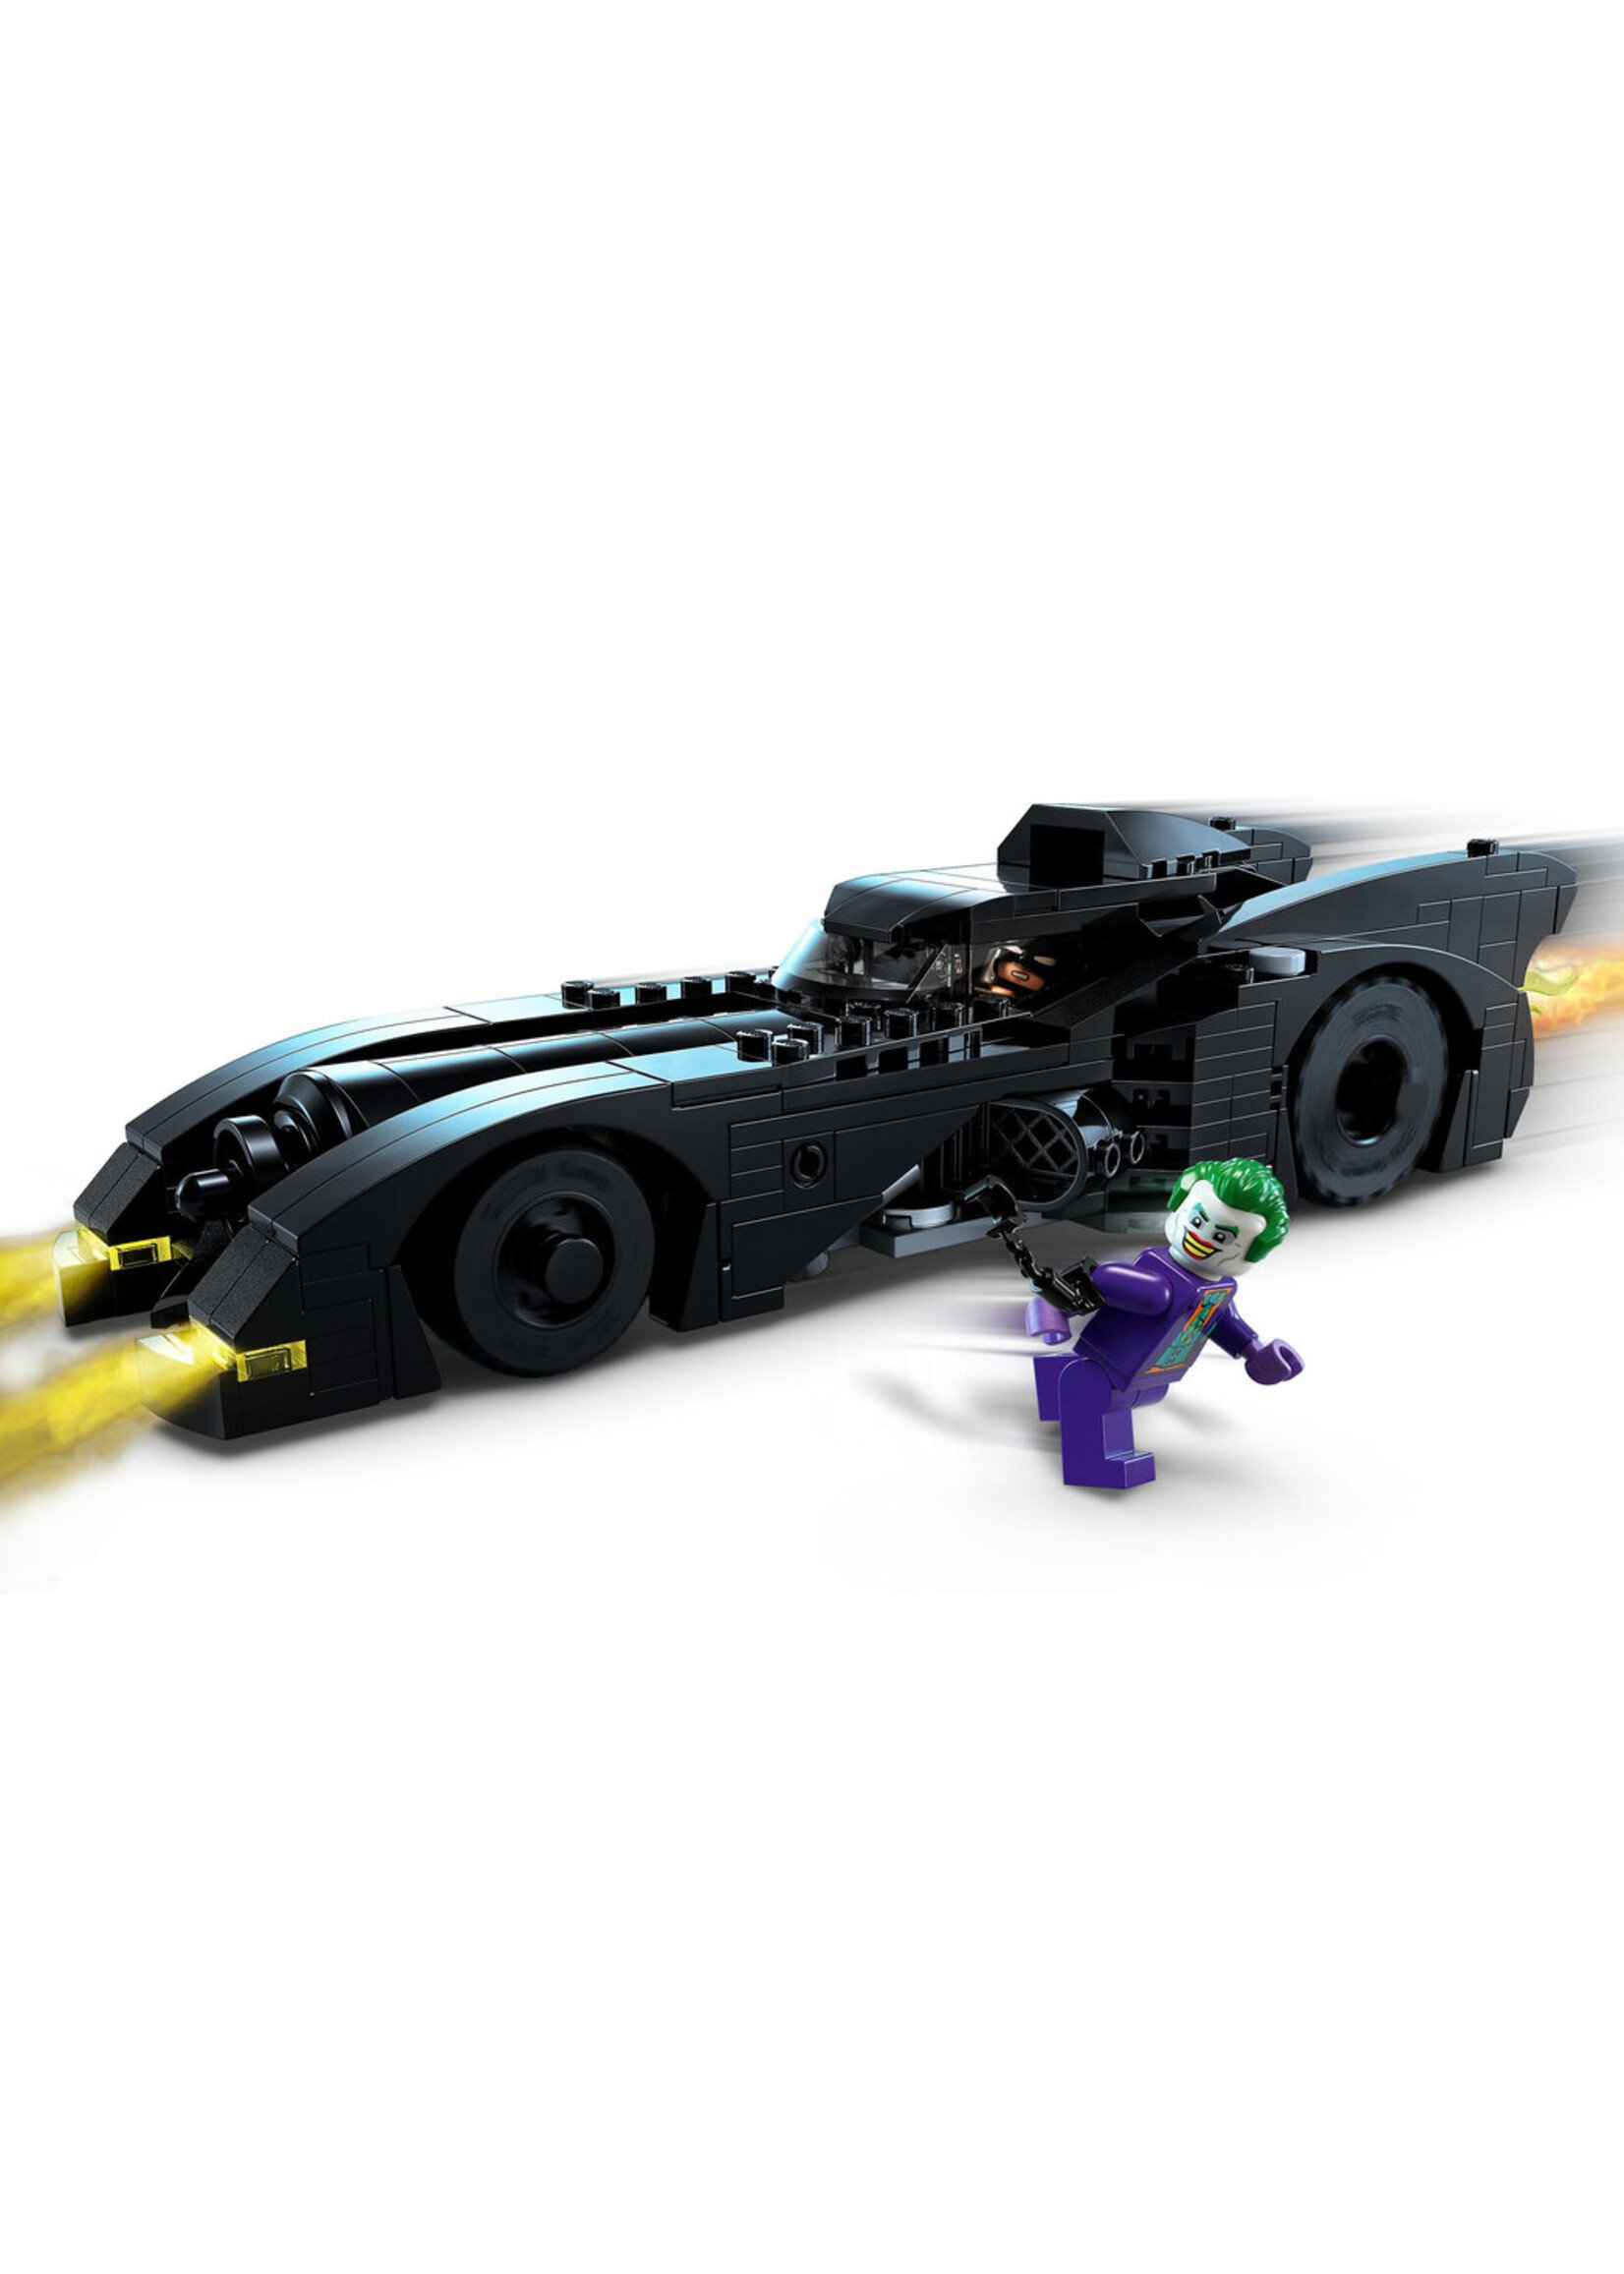 LEGO® DC Batmobile™: Batman™ vs. The Joker™ Chase 76224 Building Toy Set (